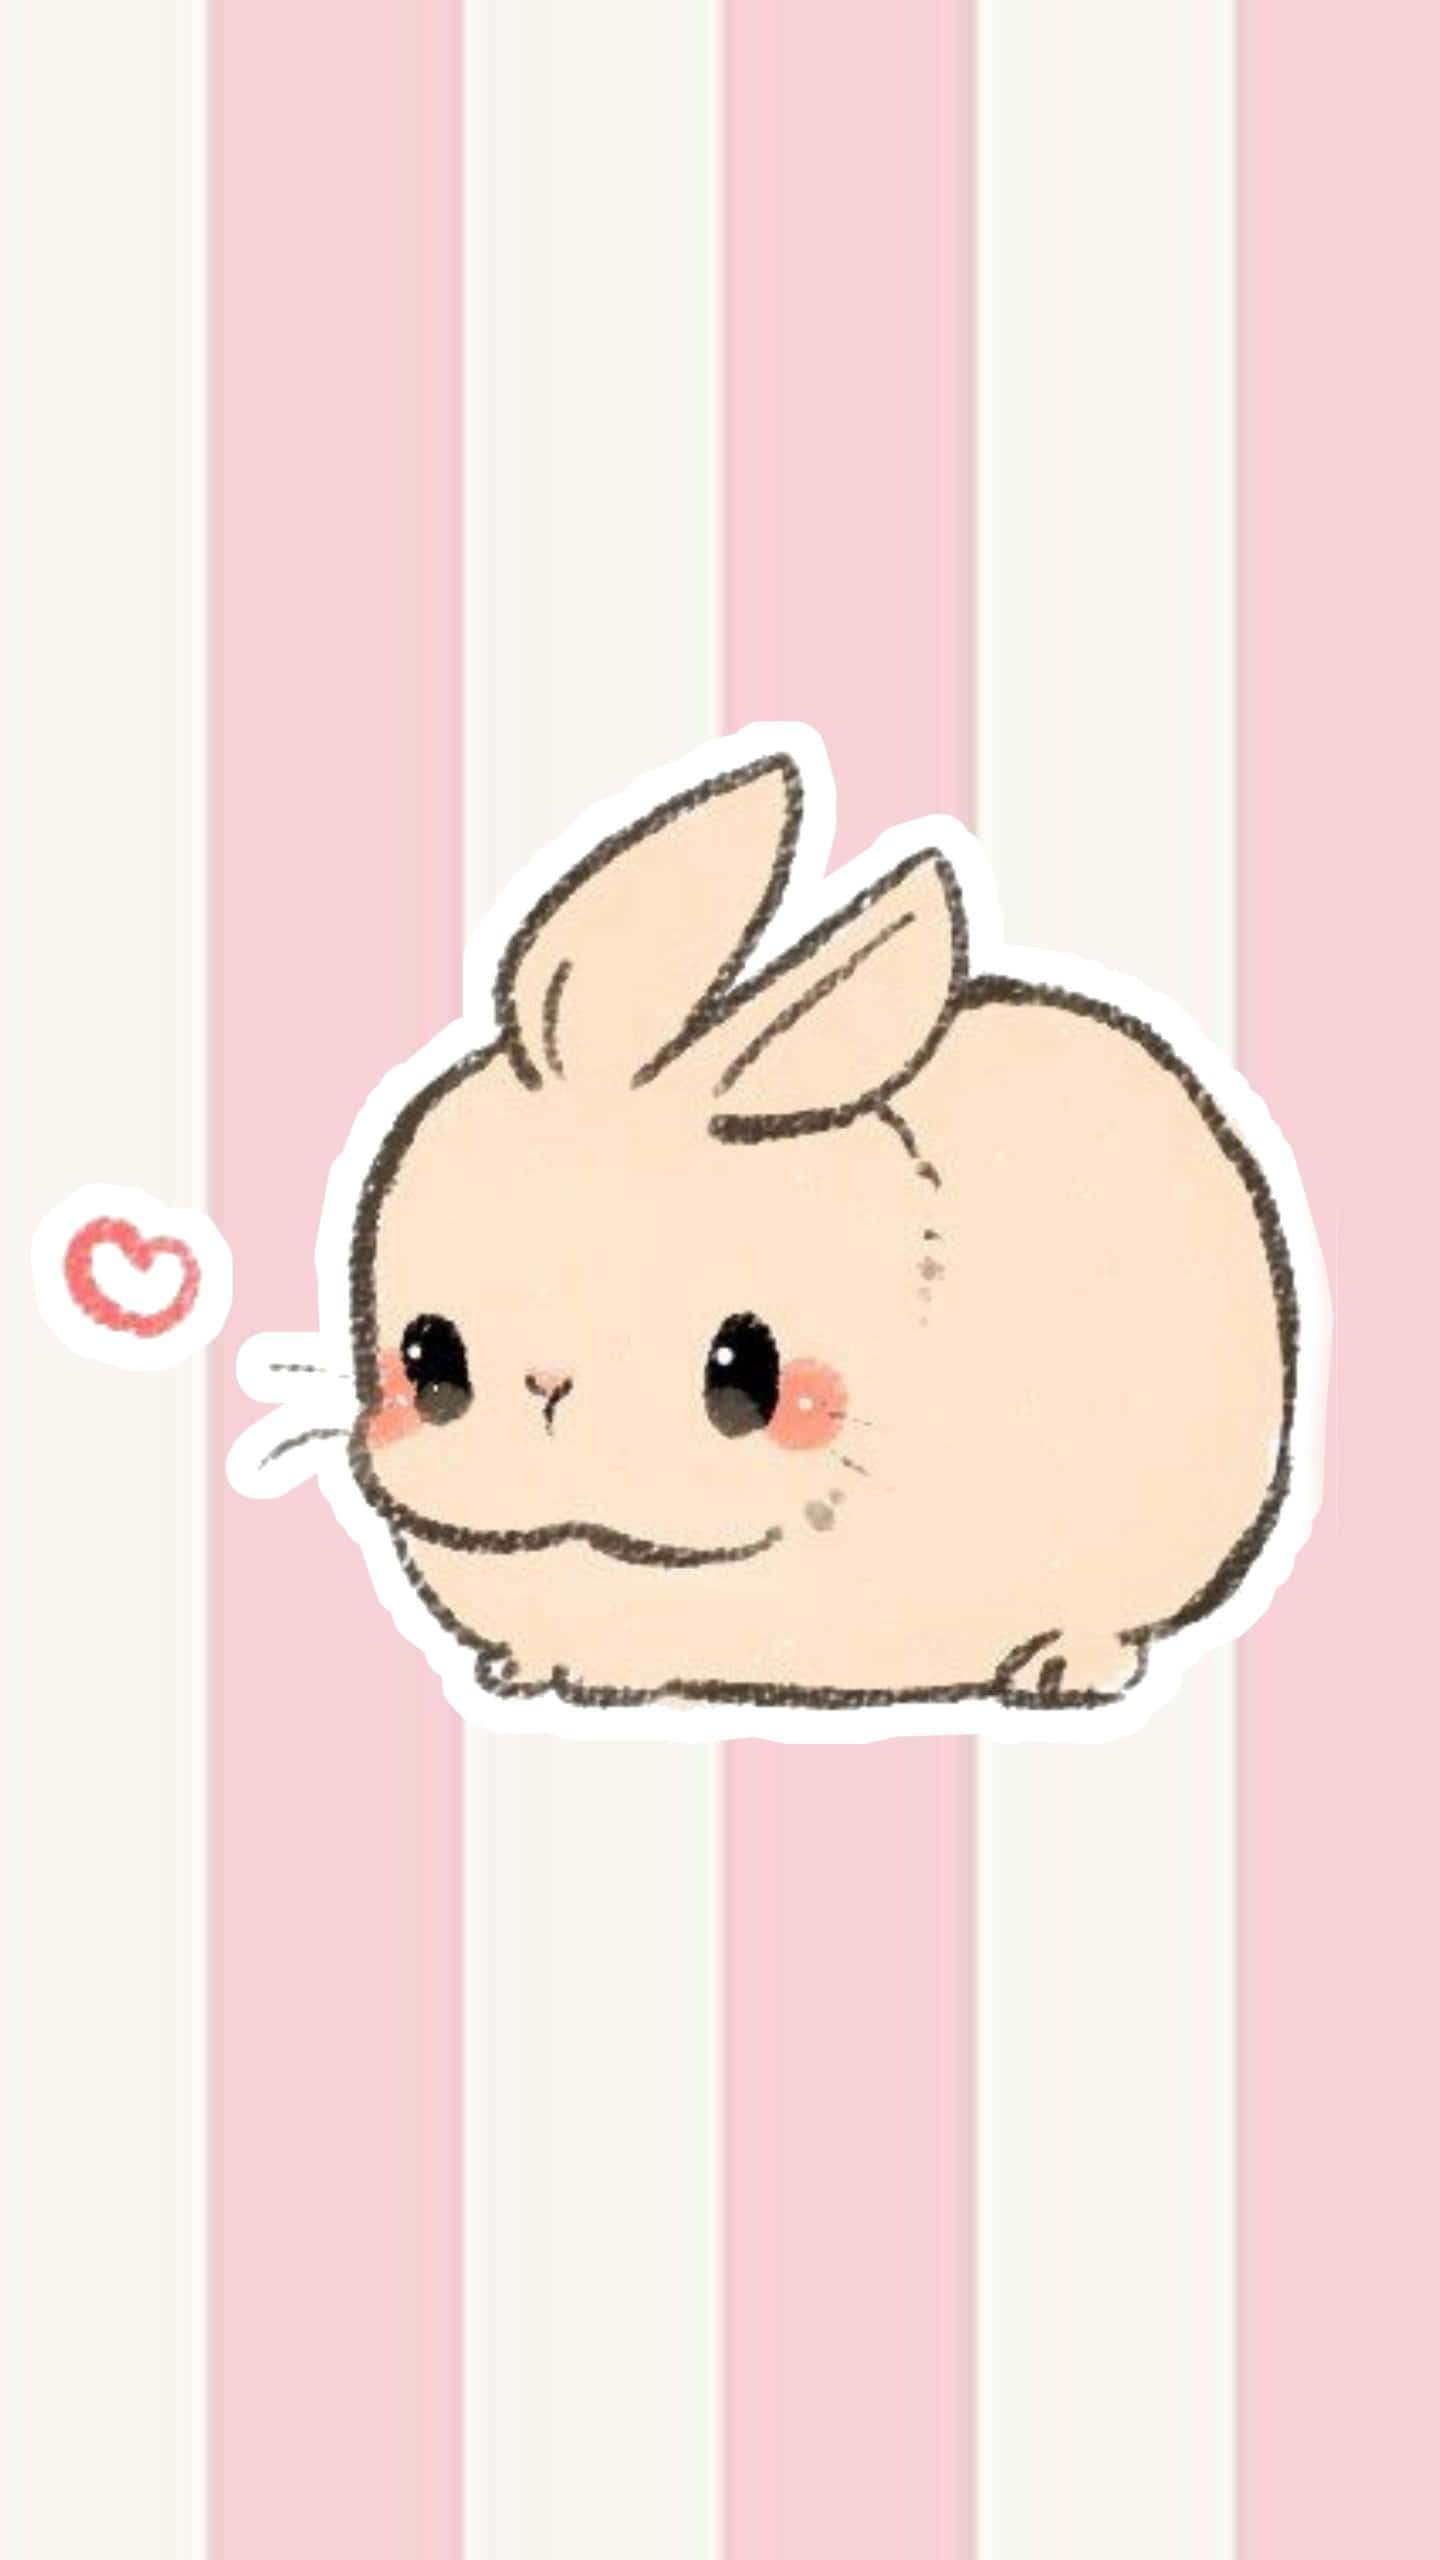 This Adorable Kawaii Bunny is Ready to Make You Smile Wallpaper